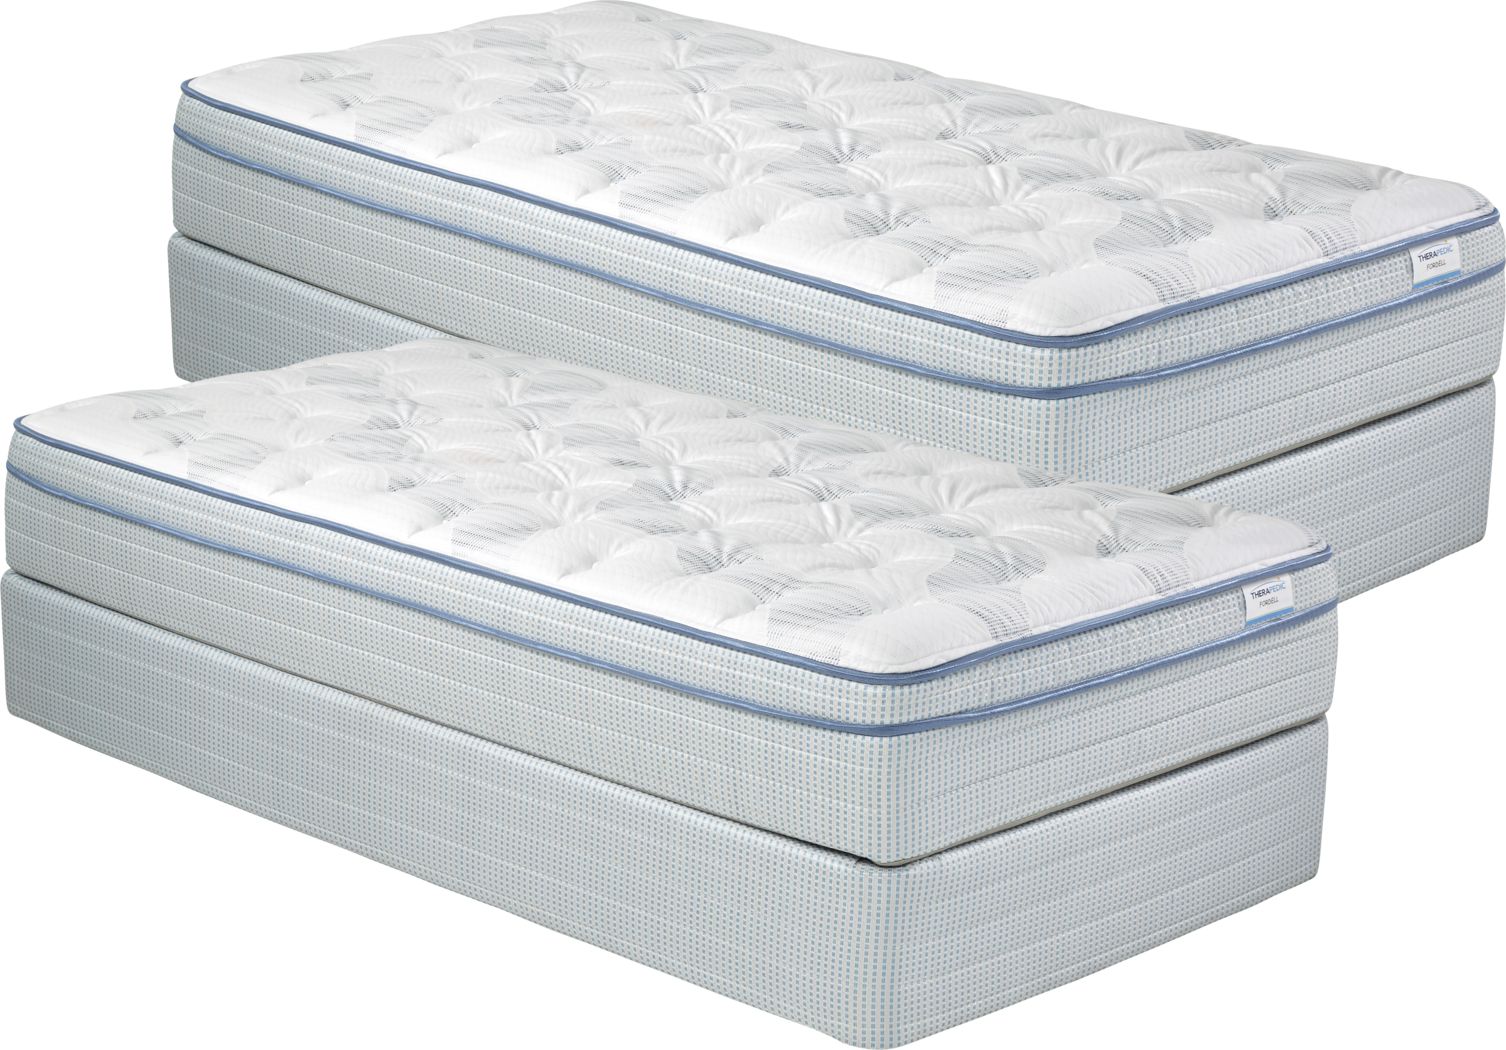 2 twin mattress set